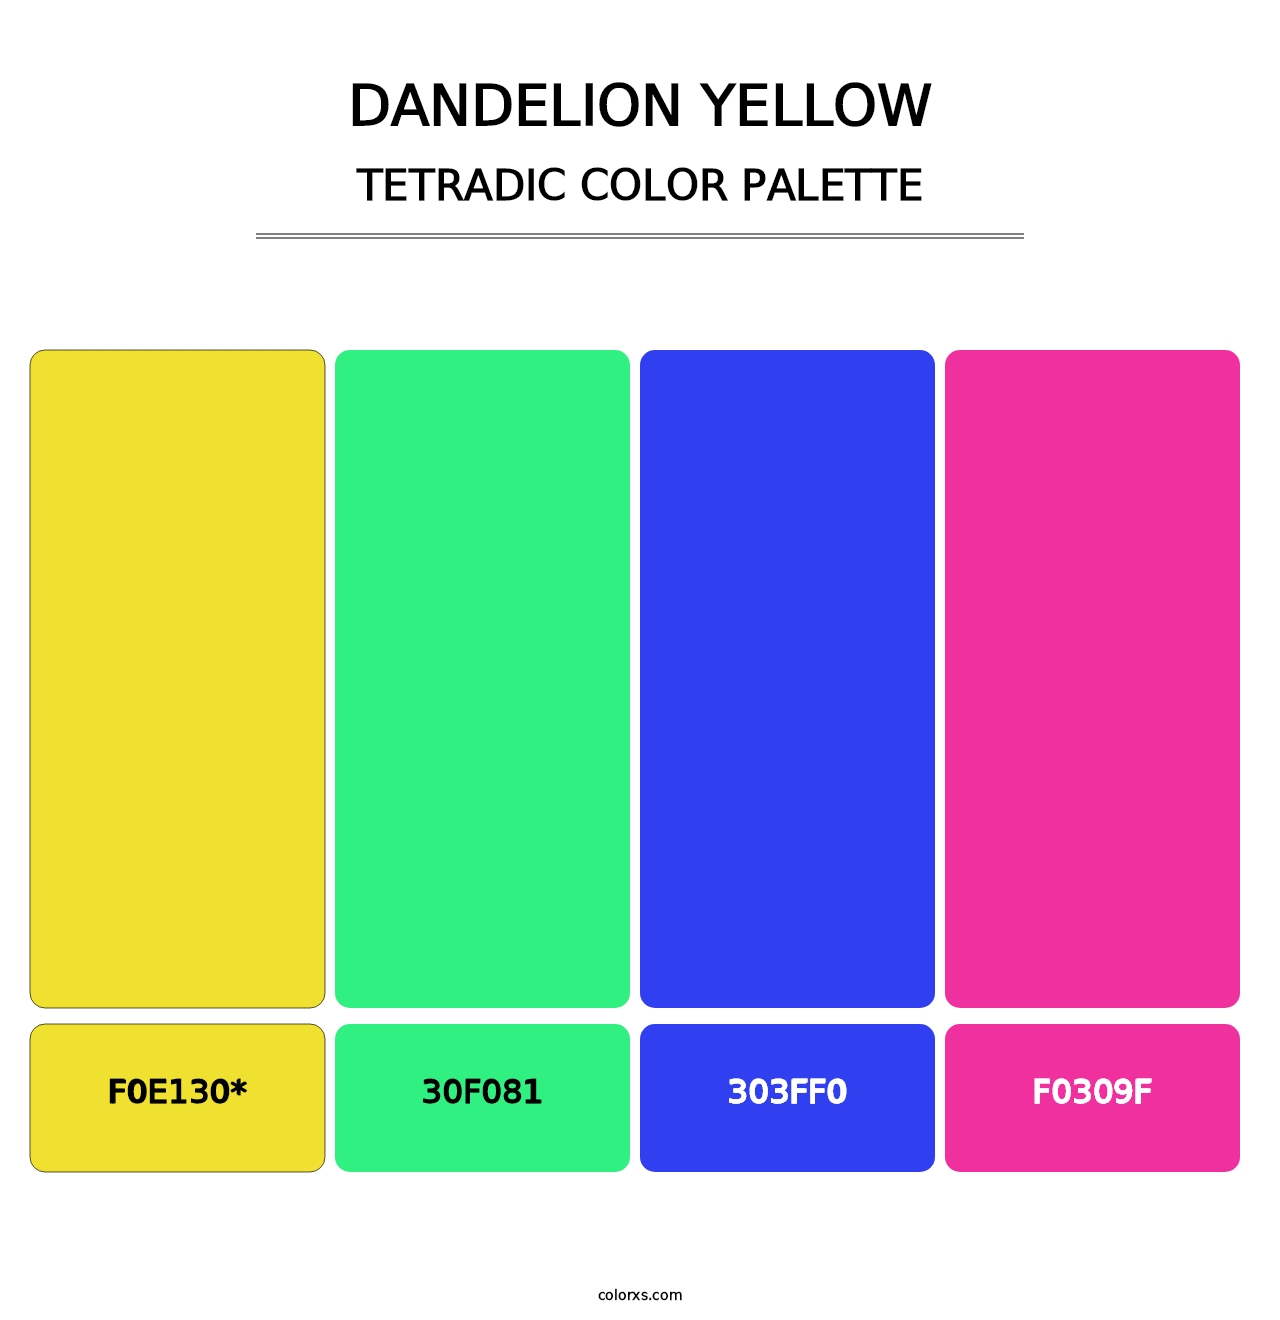 Dandelion Yellow - Tetradic Color Palette